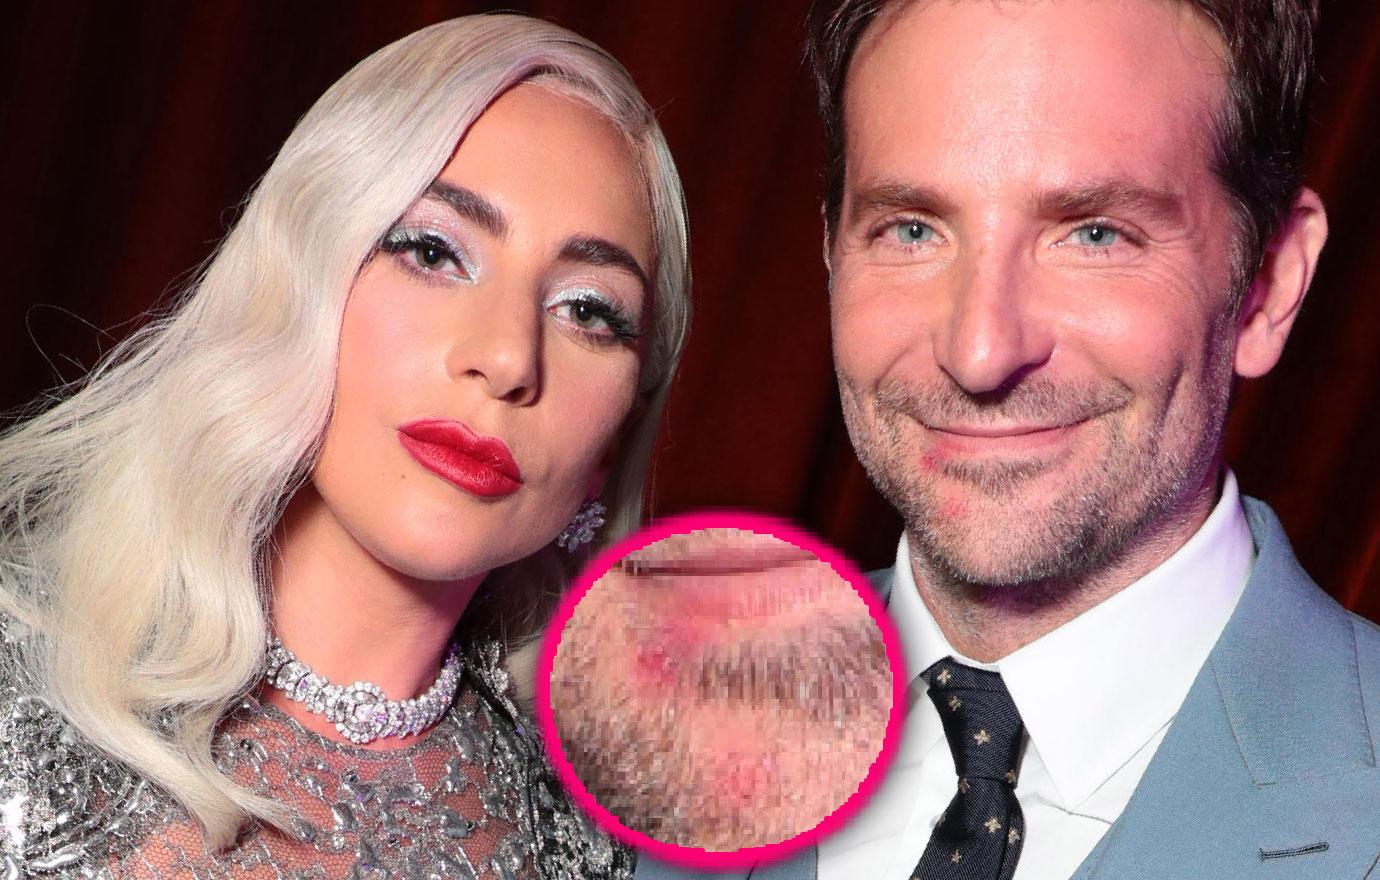 Lady Gaga S Lipstick Seen On Bradley Cooper S Mouth